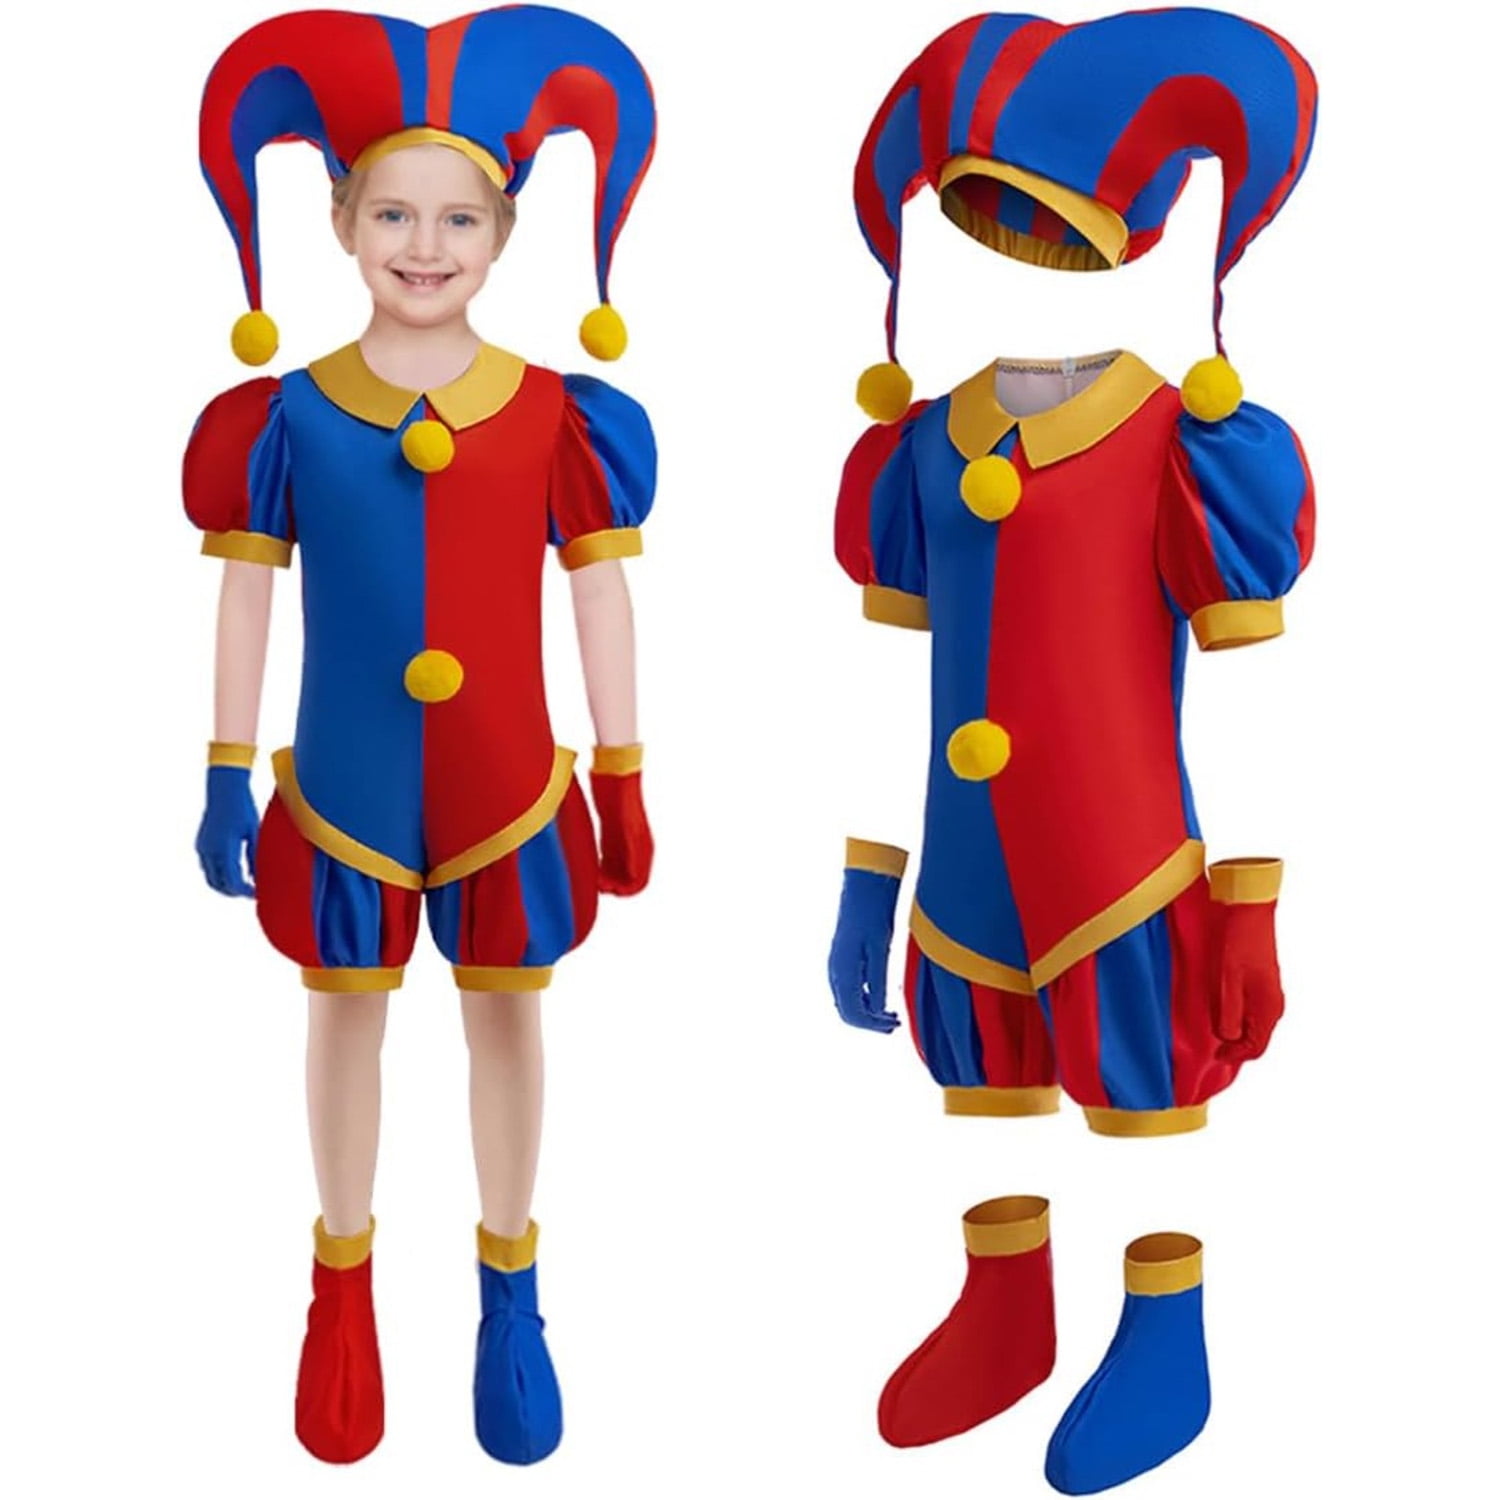 The Amazing Digital Circus Costume Pomni Costumes for Kids Boys Girls ...